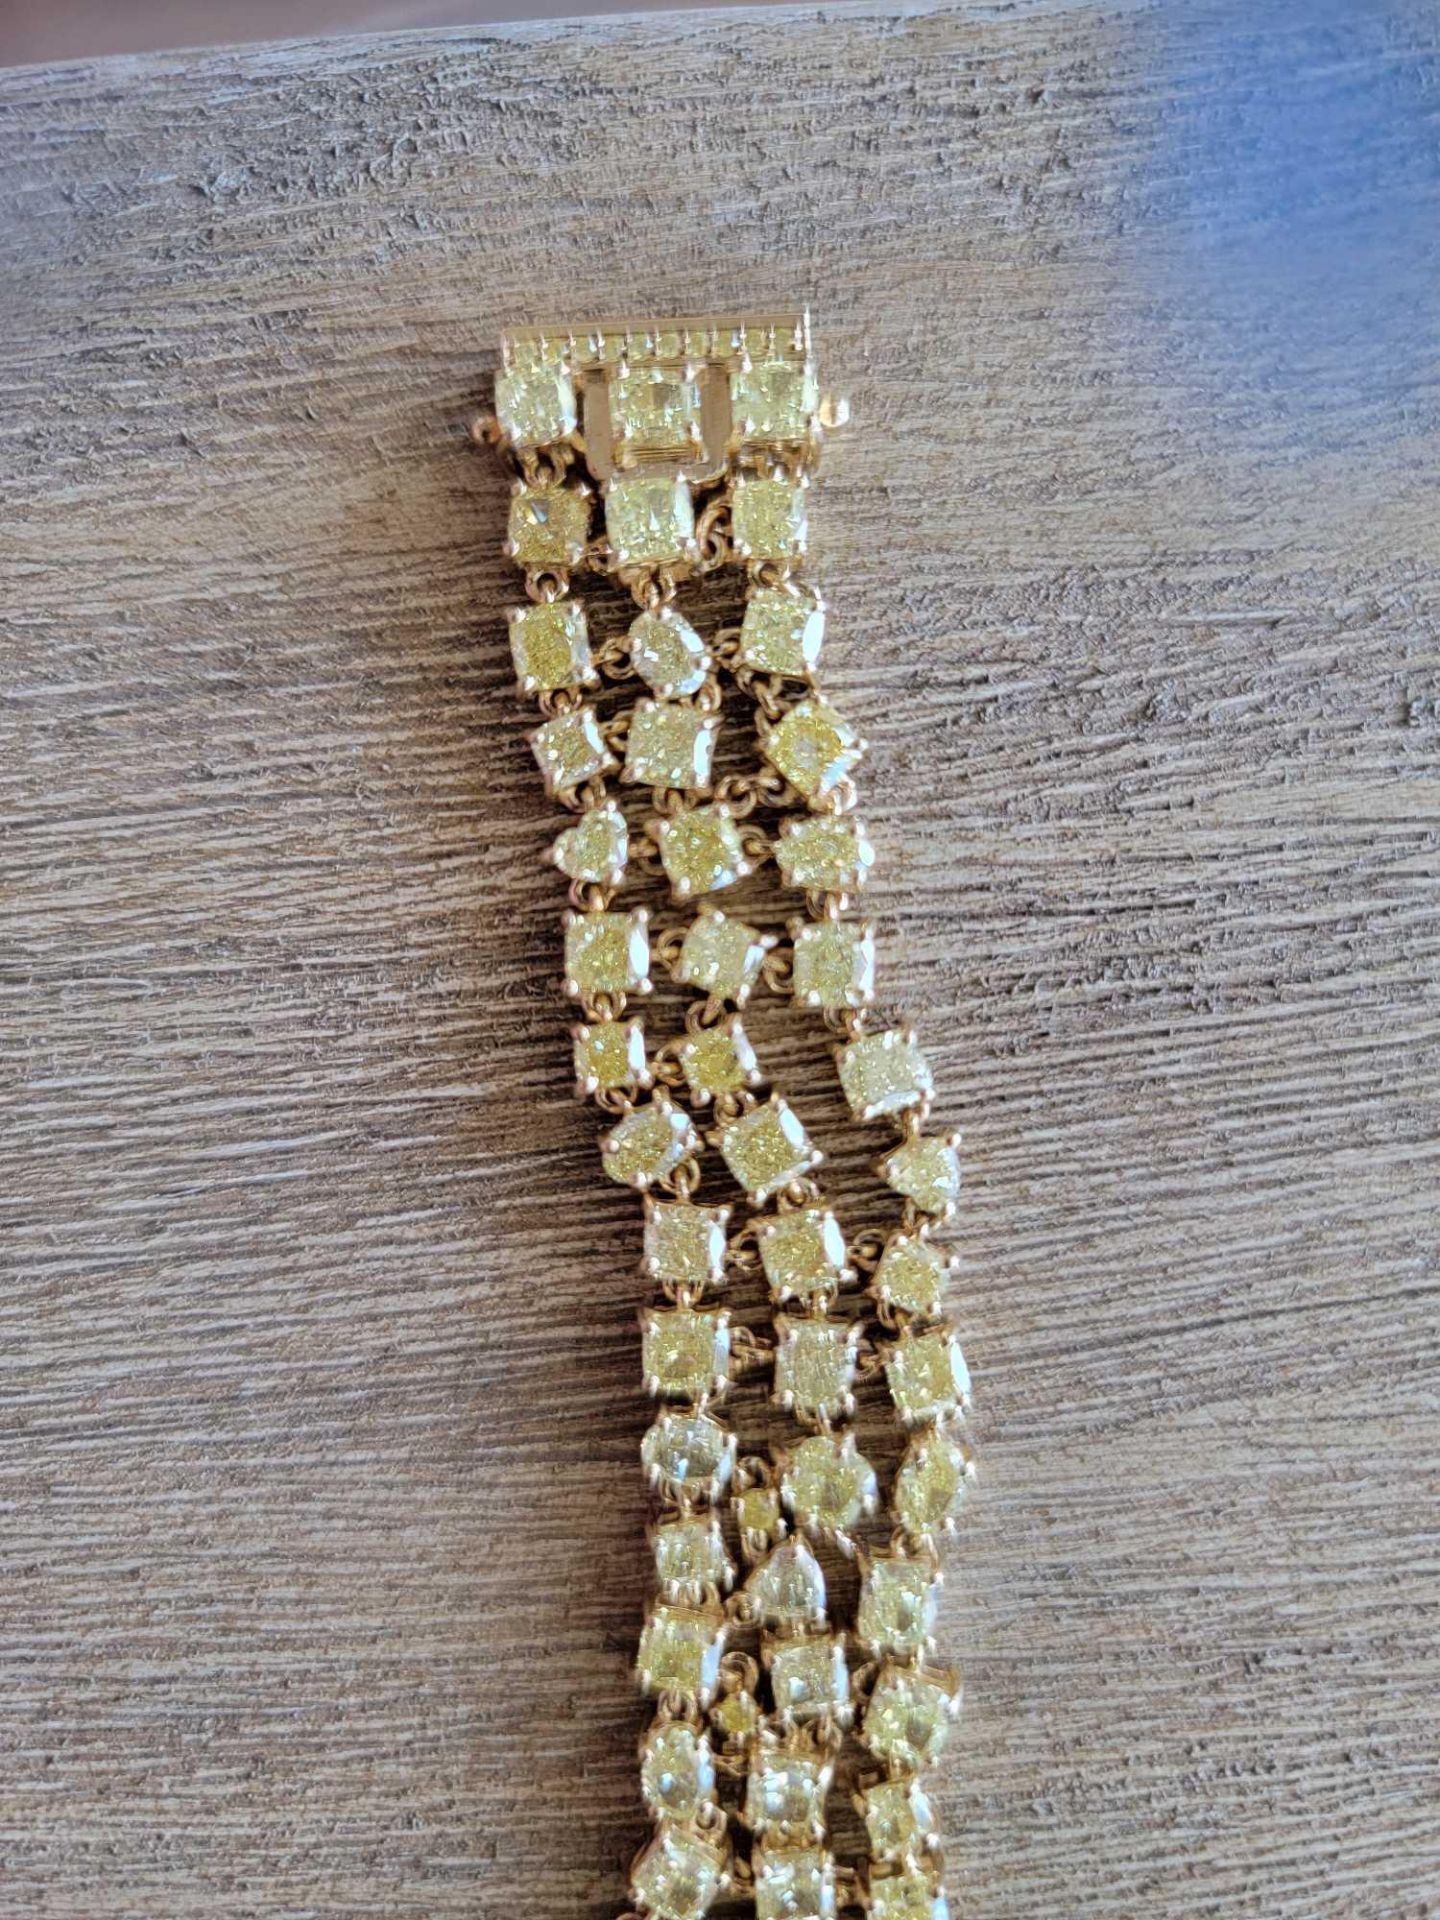 18KT Gold, 30 Carat Intense (canary) yellow diamond bracelet - Image 12 of 21